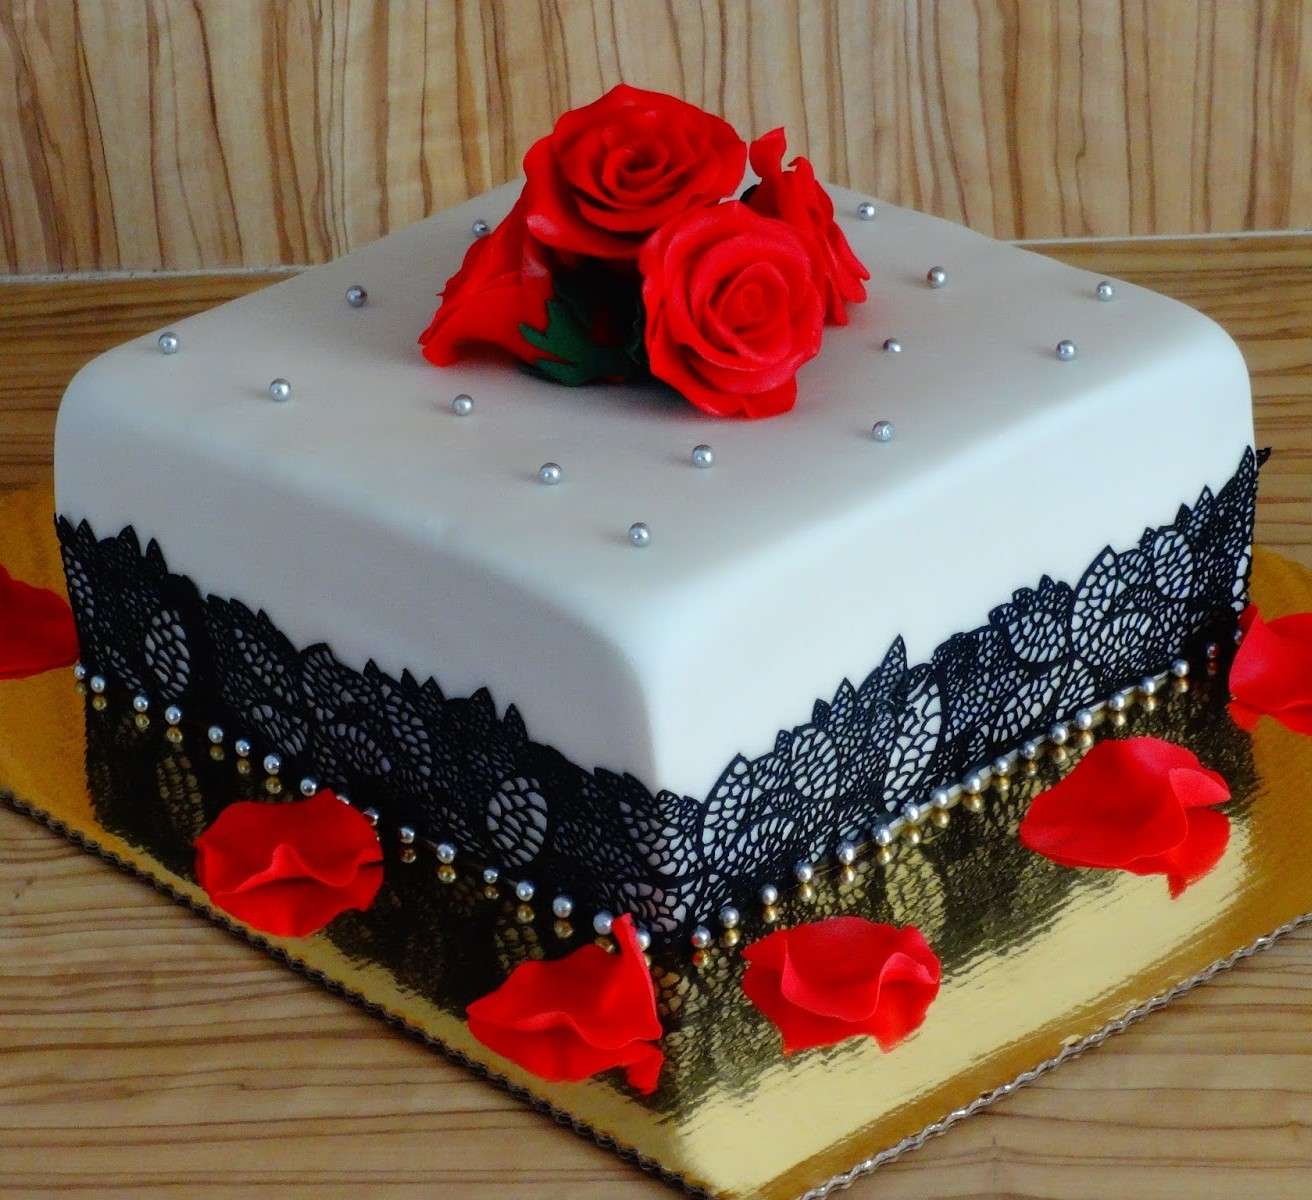 Celebration cake with roses jigsaw puzzle online